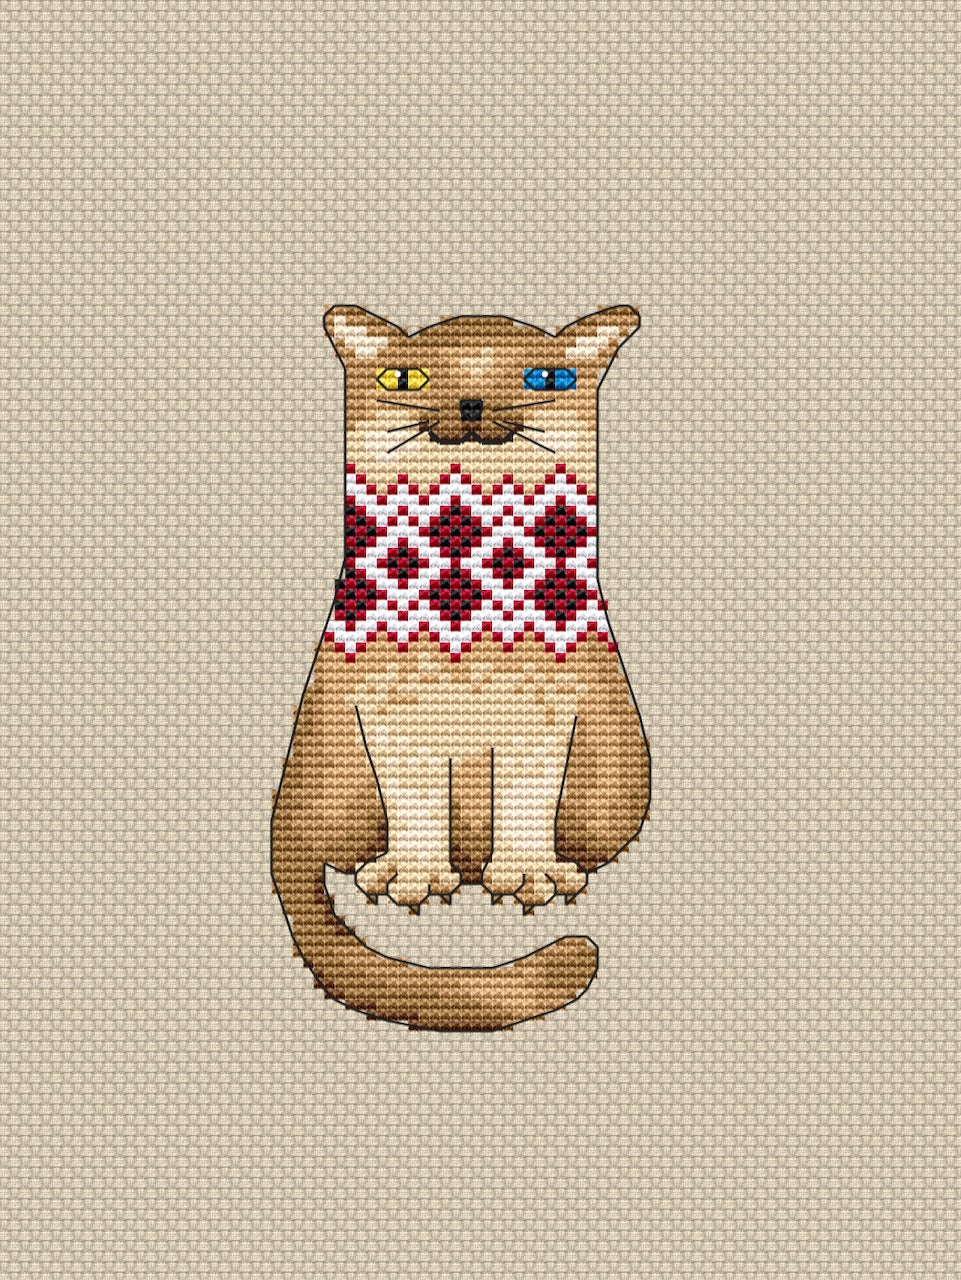 Ukrainian cat cross stitch pattern